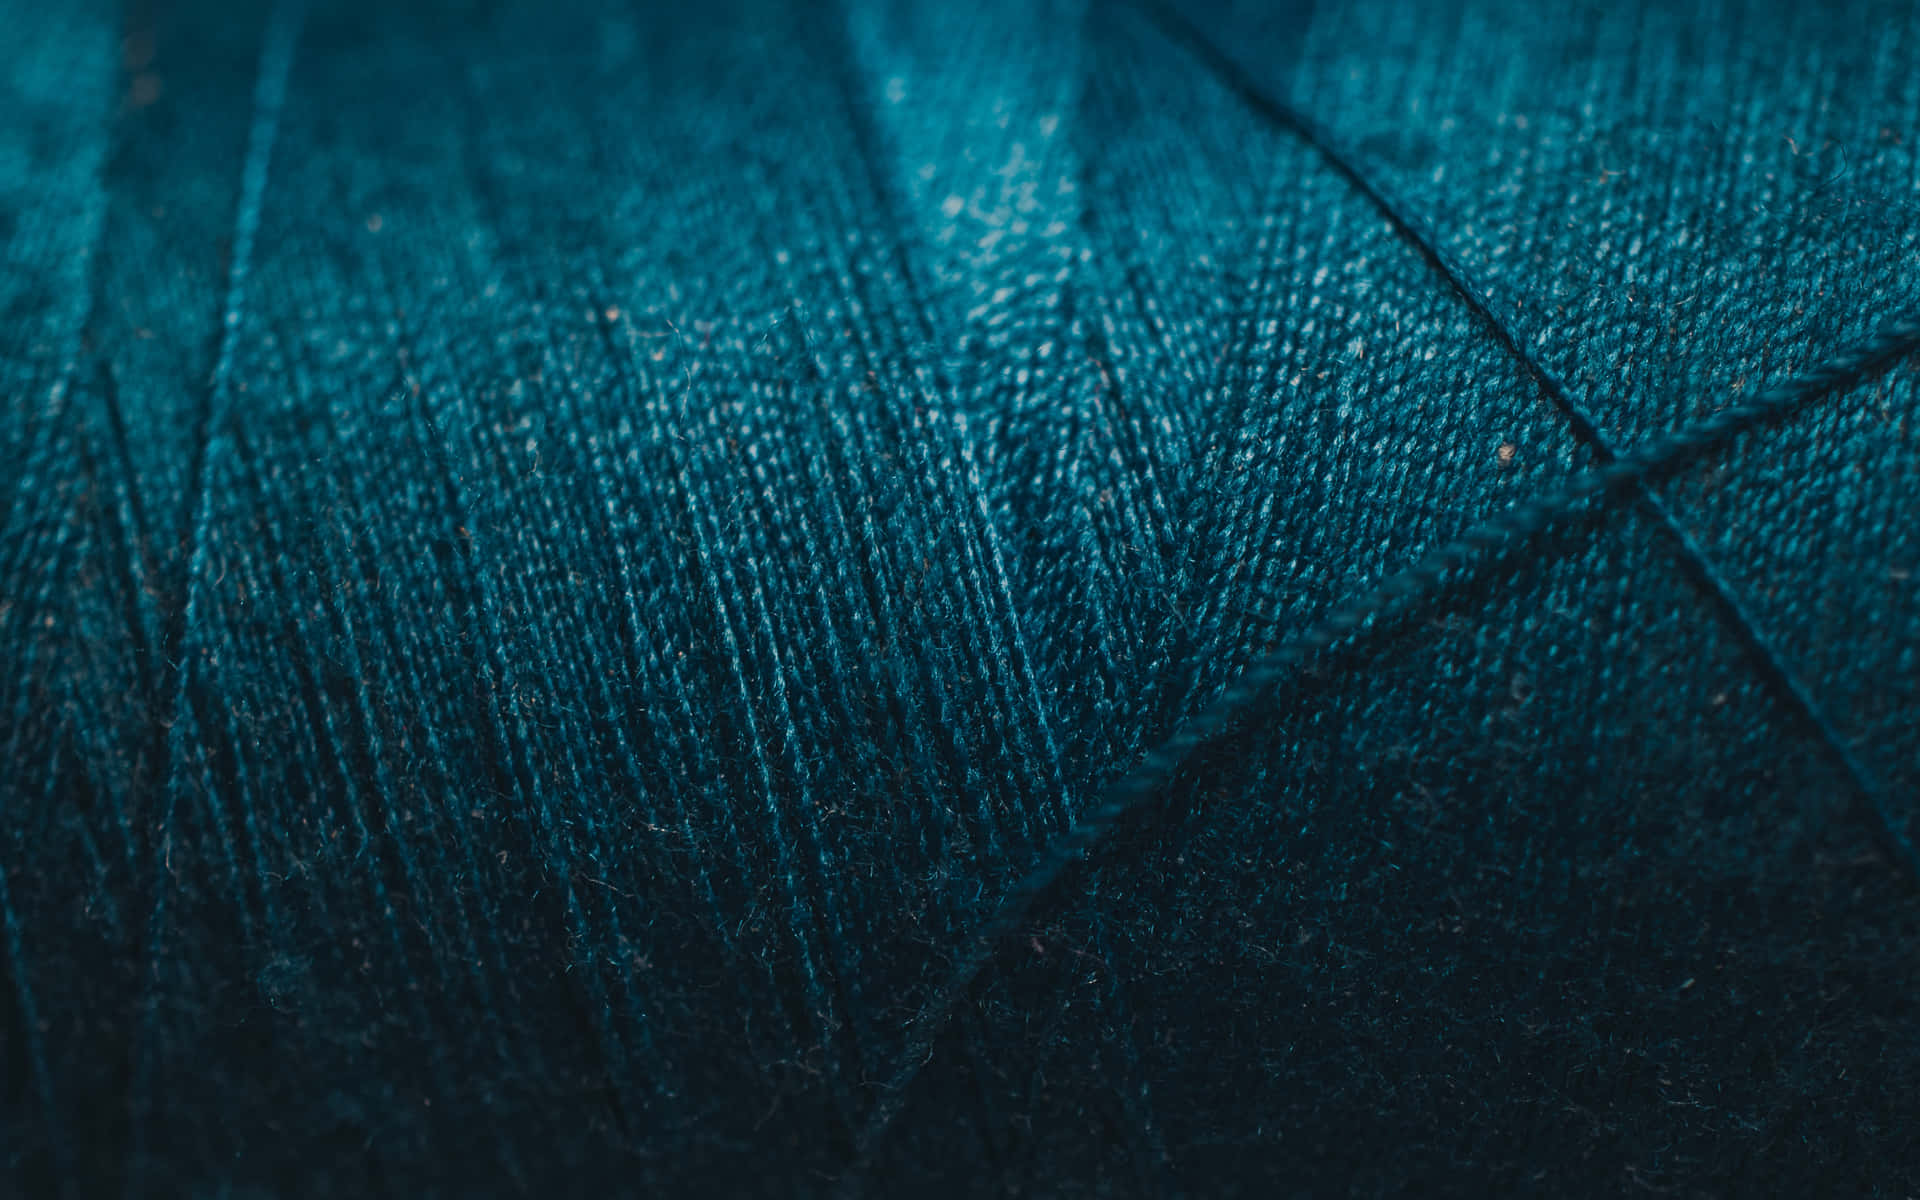 A Close Up Of A Blue Thread